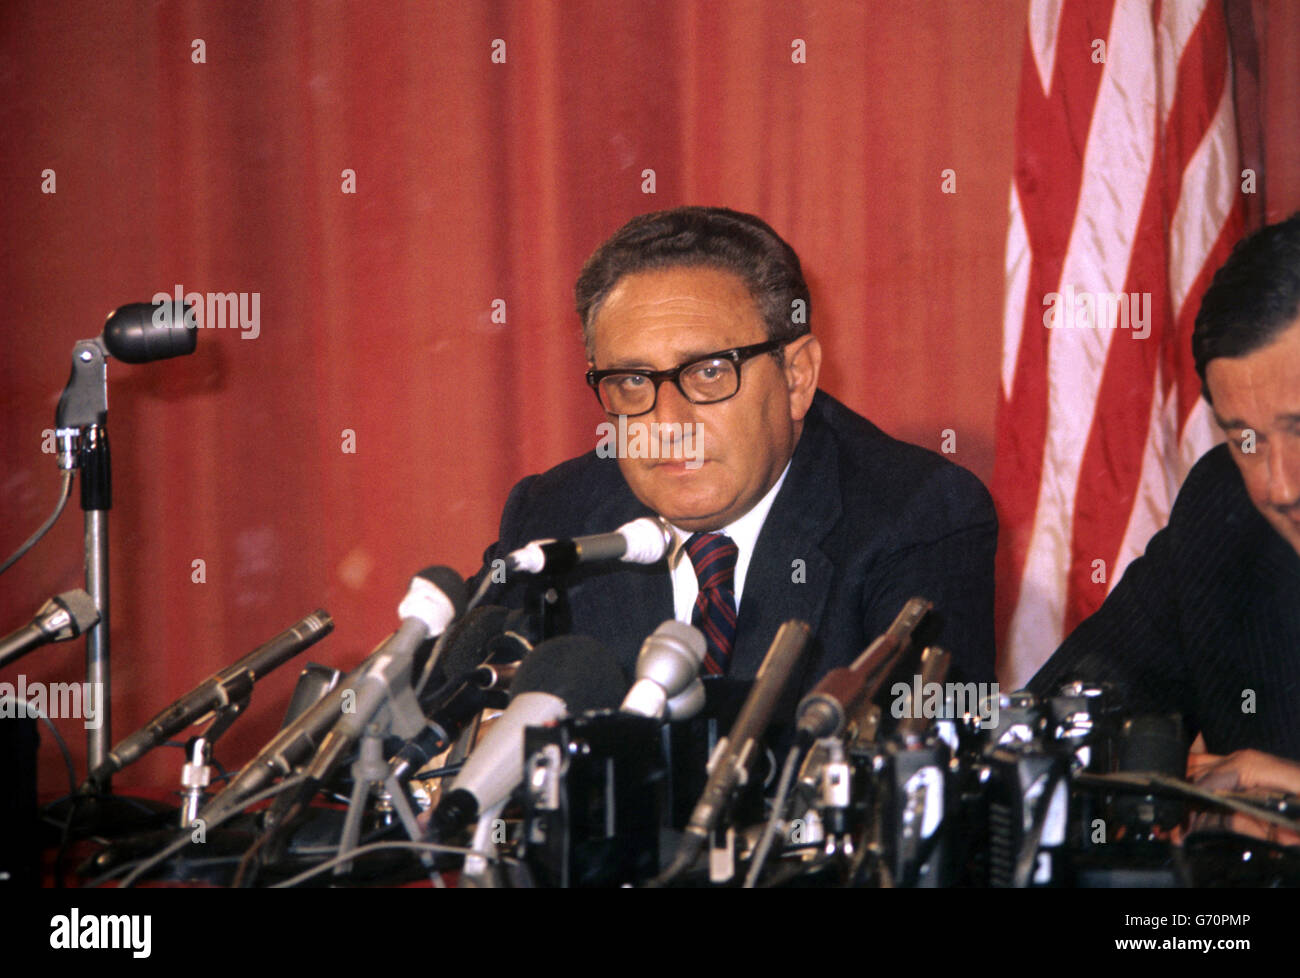 Politica - Dr Henry Kissinger - Ambasciata Americana, Londra Foto Stock